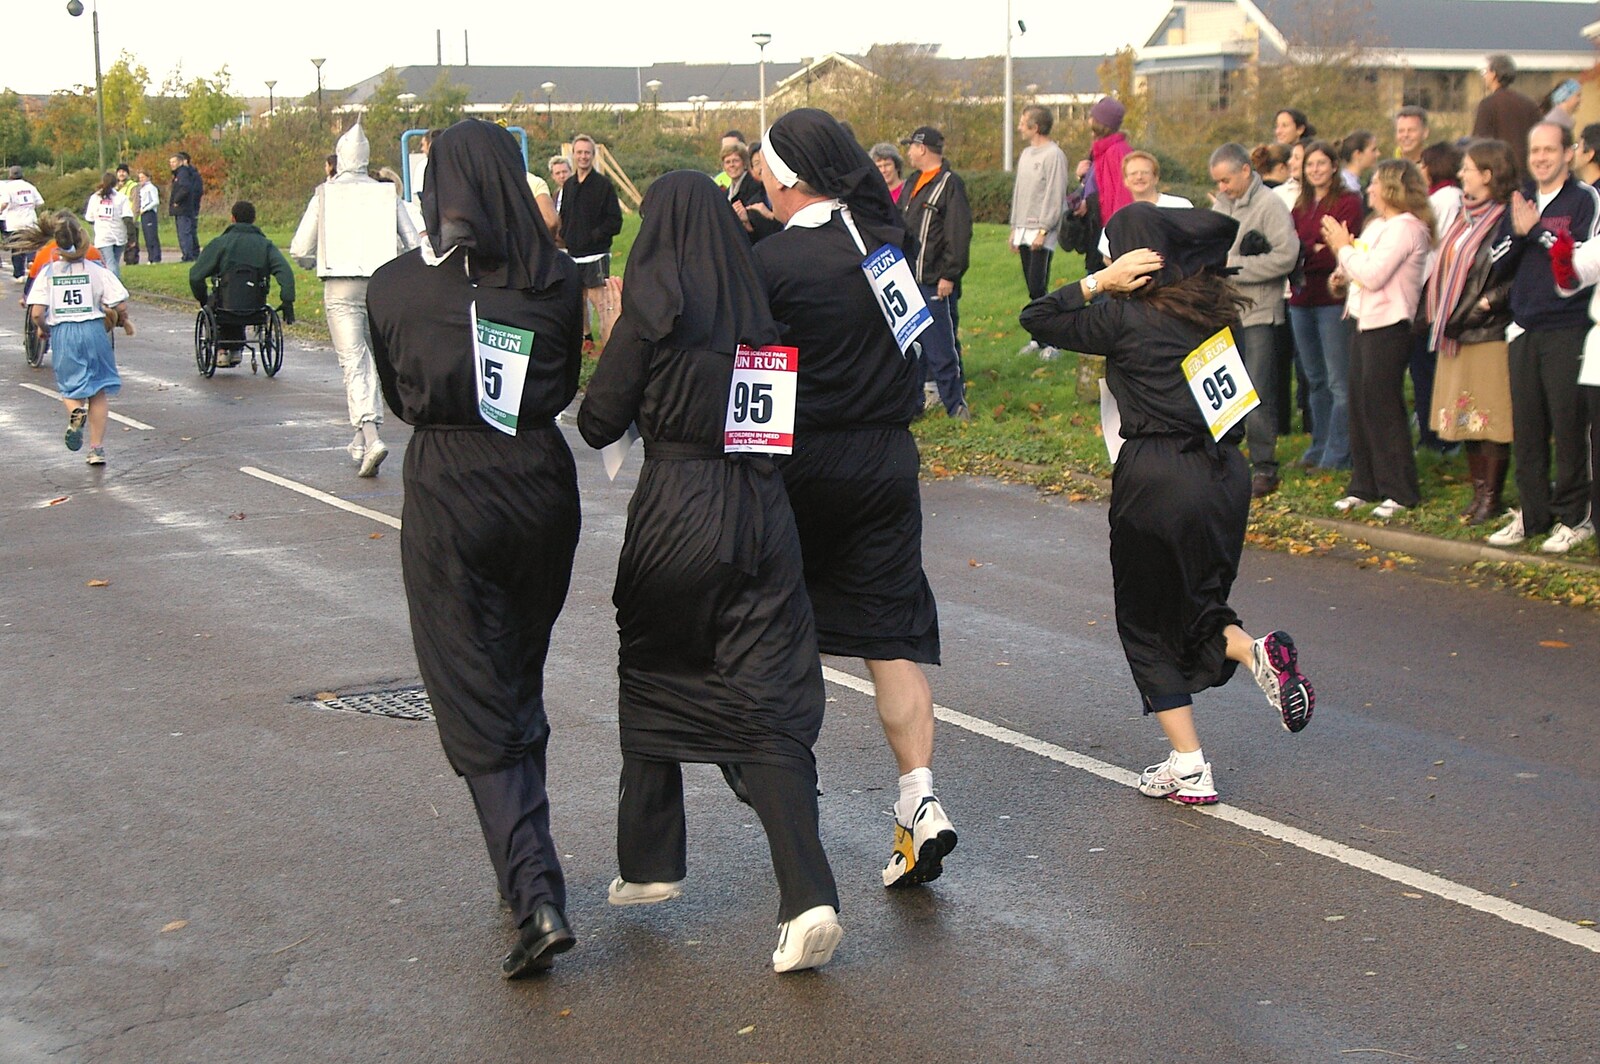 The nuns run off from Cambridge Science Park "Children in Need" Fun Run, Milton Road, Cambridge - 17th November 2006